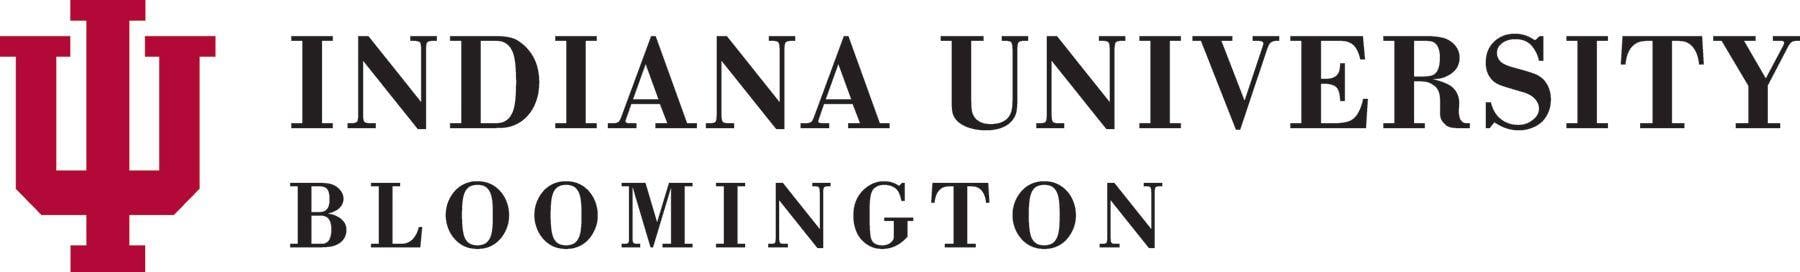 Indiana University Bloomington Logo Logodix